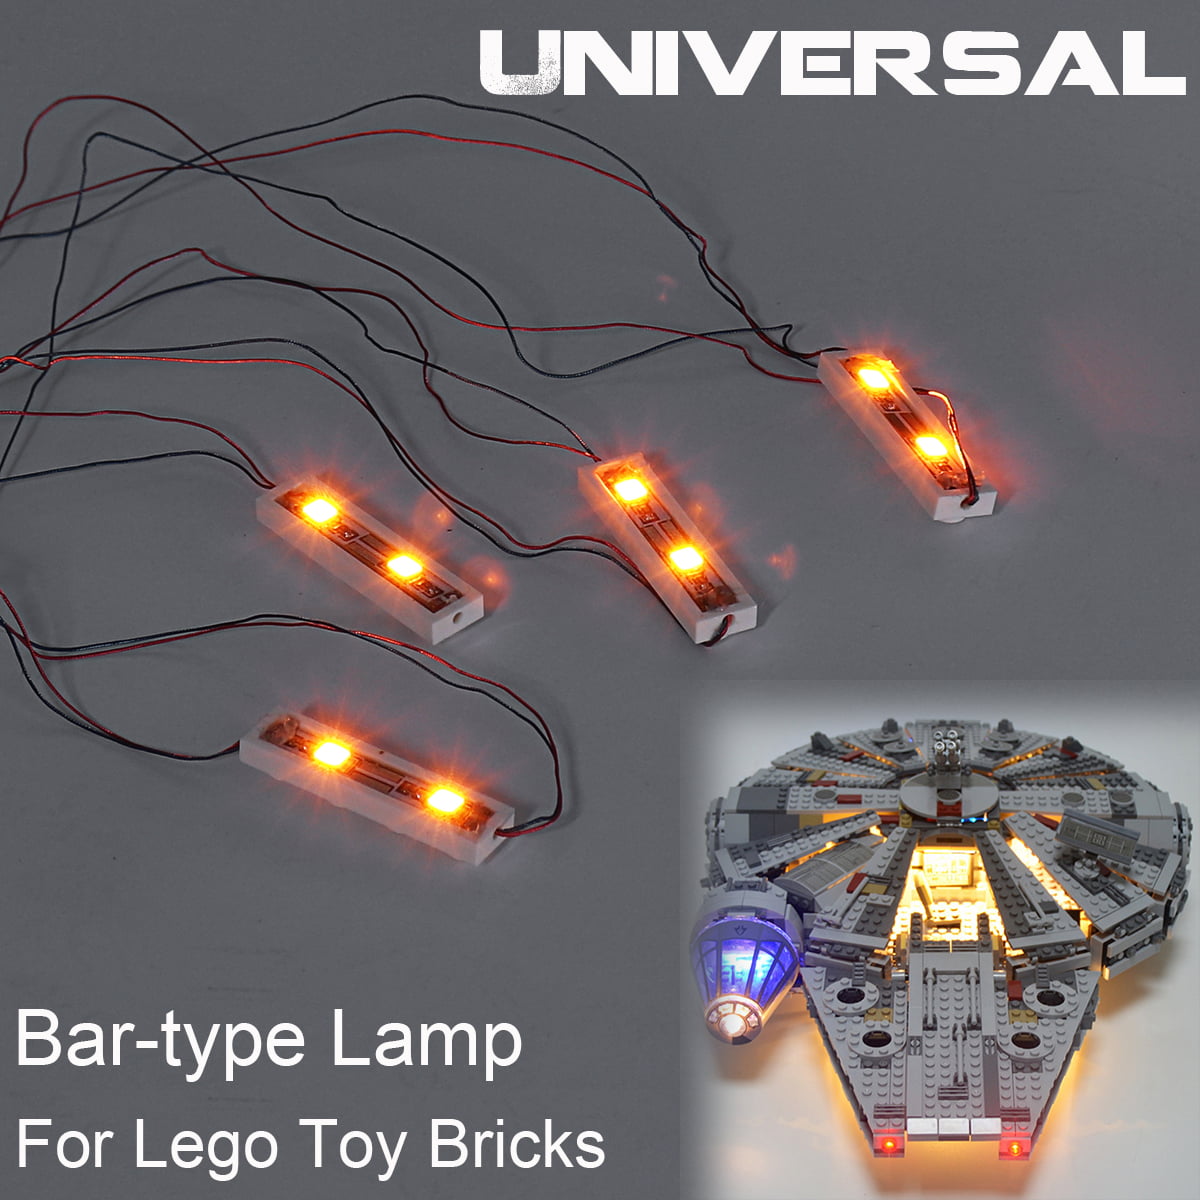 Universal LED Light Lighting Kit For Lego Toy Bricks Bar-type Lamp/Round Lamp 